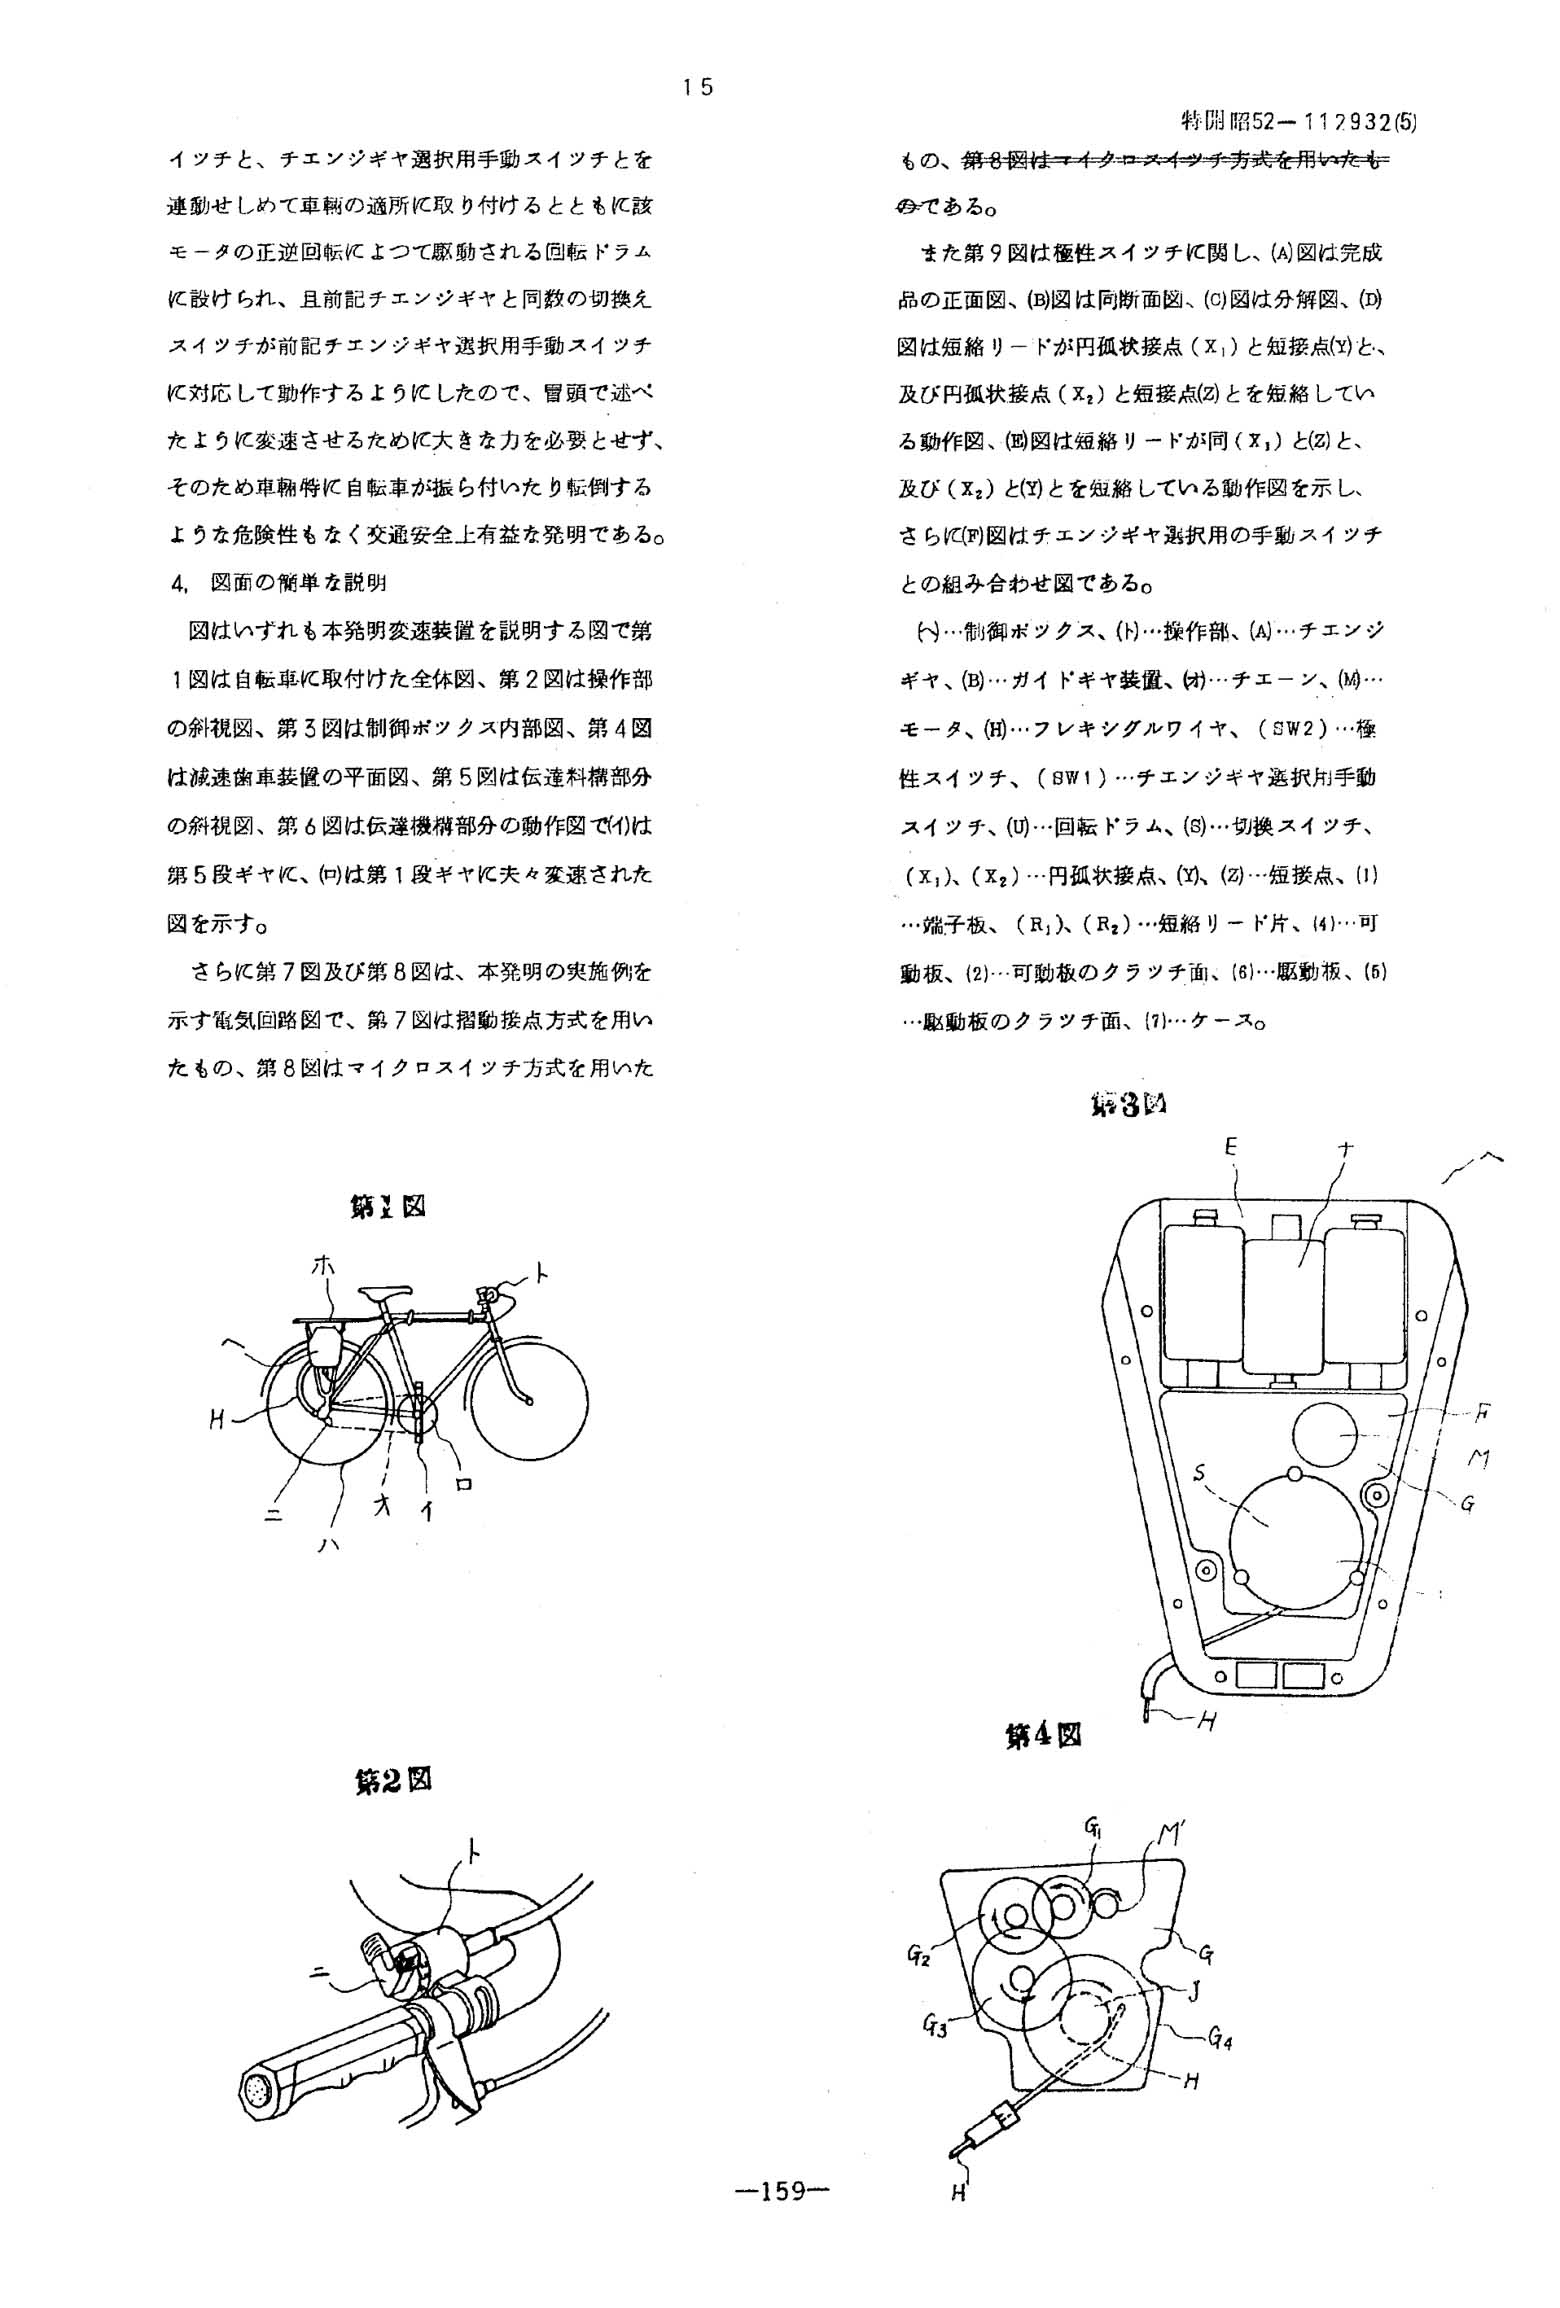 Japanese Patent S52-112932 - Sanyo scan 05 main image